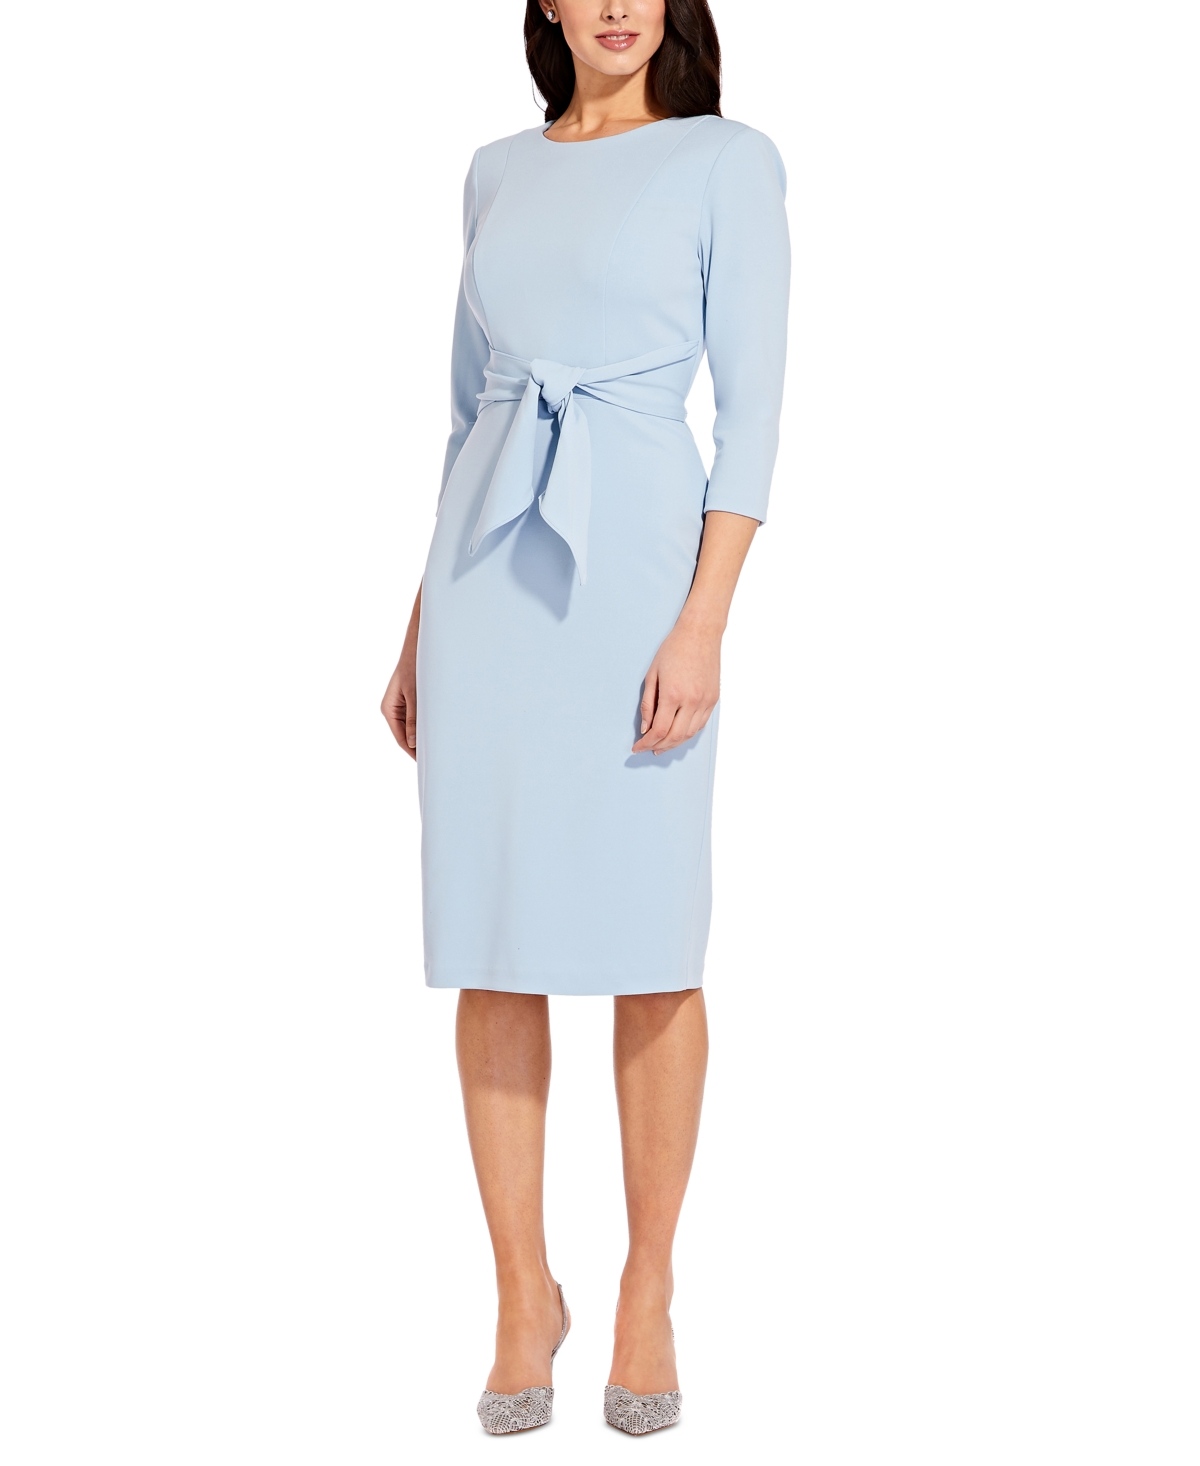 Women's Tie-Front 3/4-Sleeve Crepe Knit Dress - Violet Cobalt